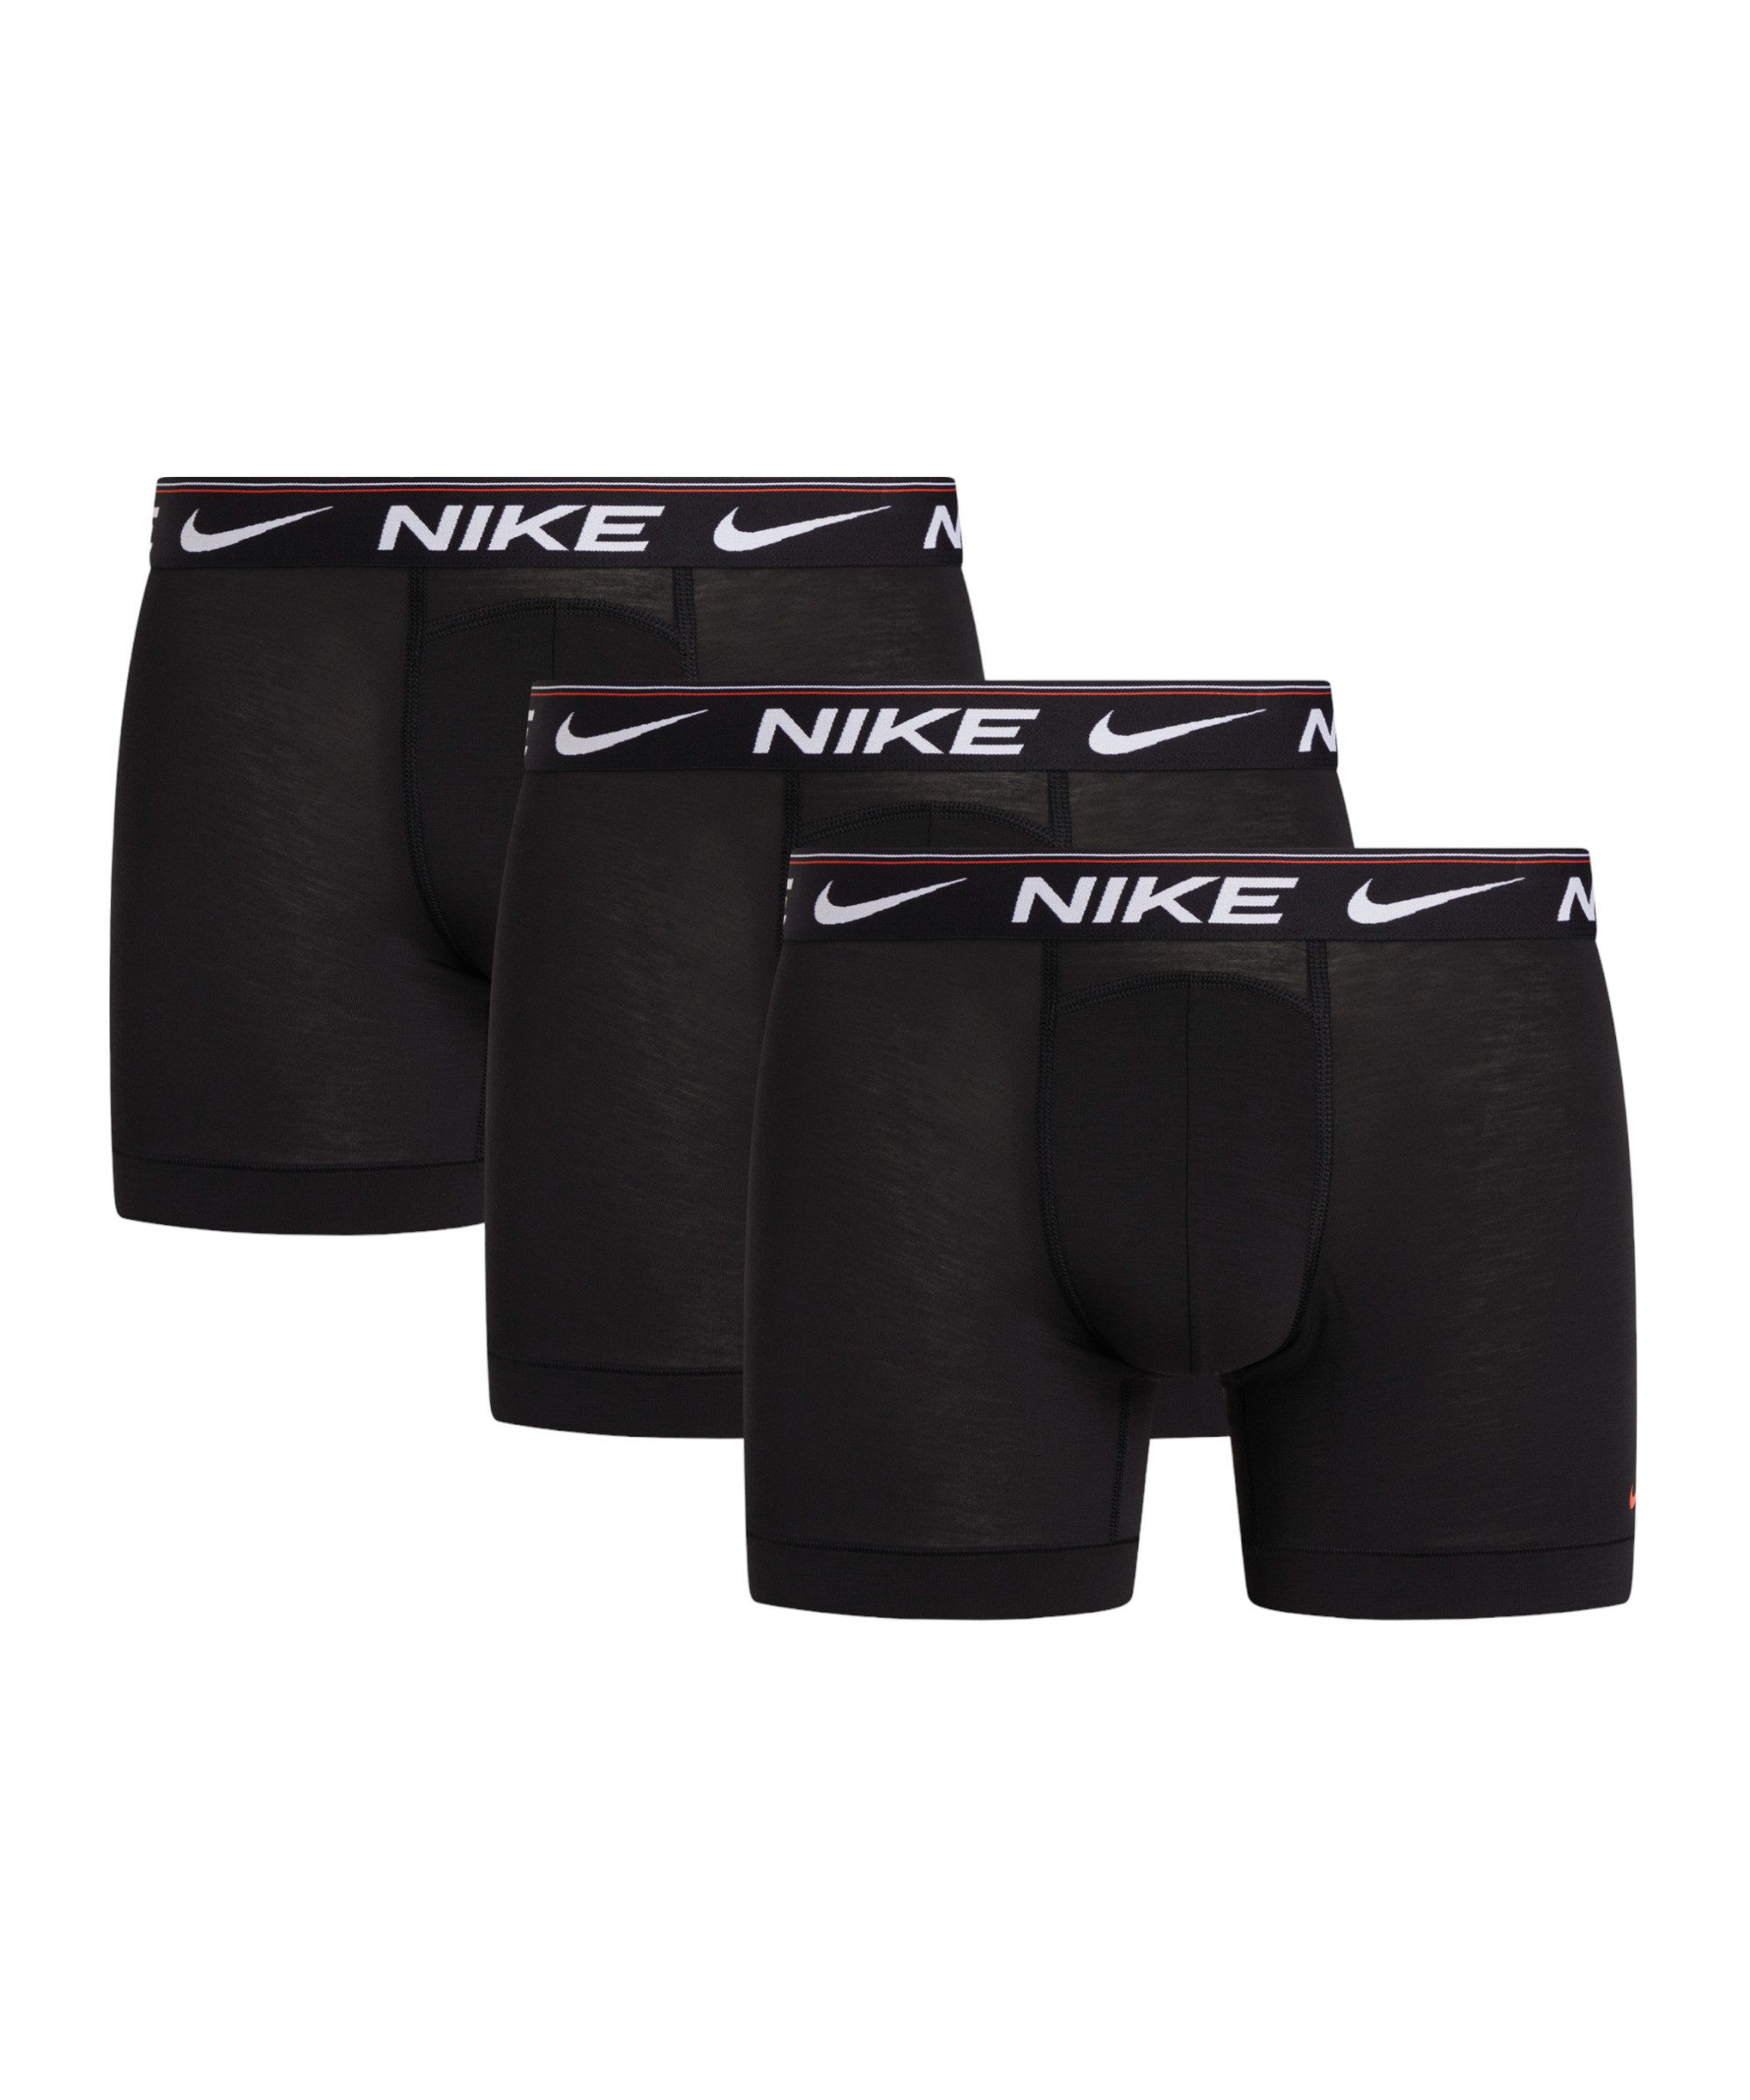 Nike Boxershorts Ultra Trunk Boxershort 3er Pack default